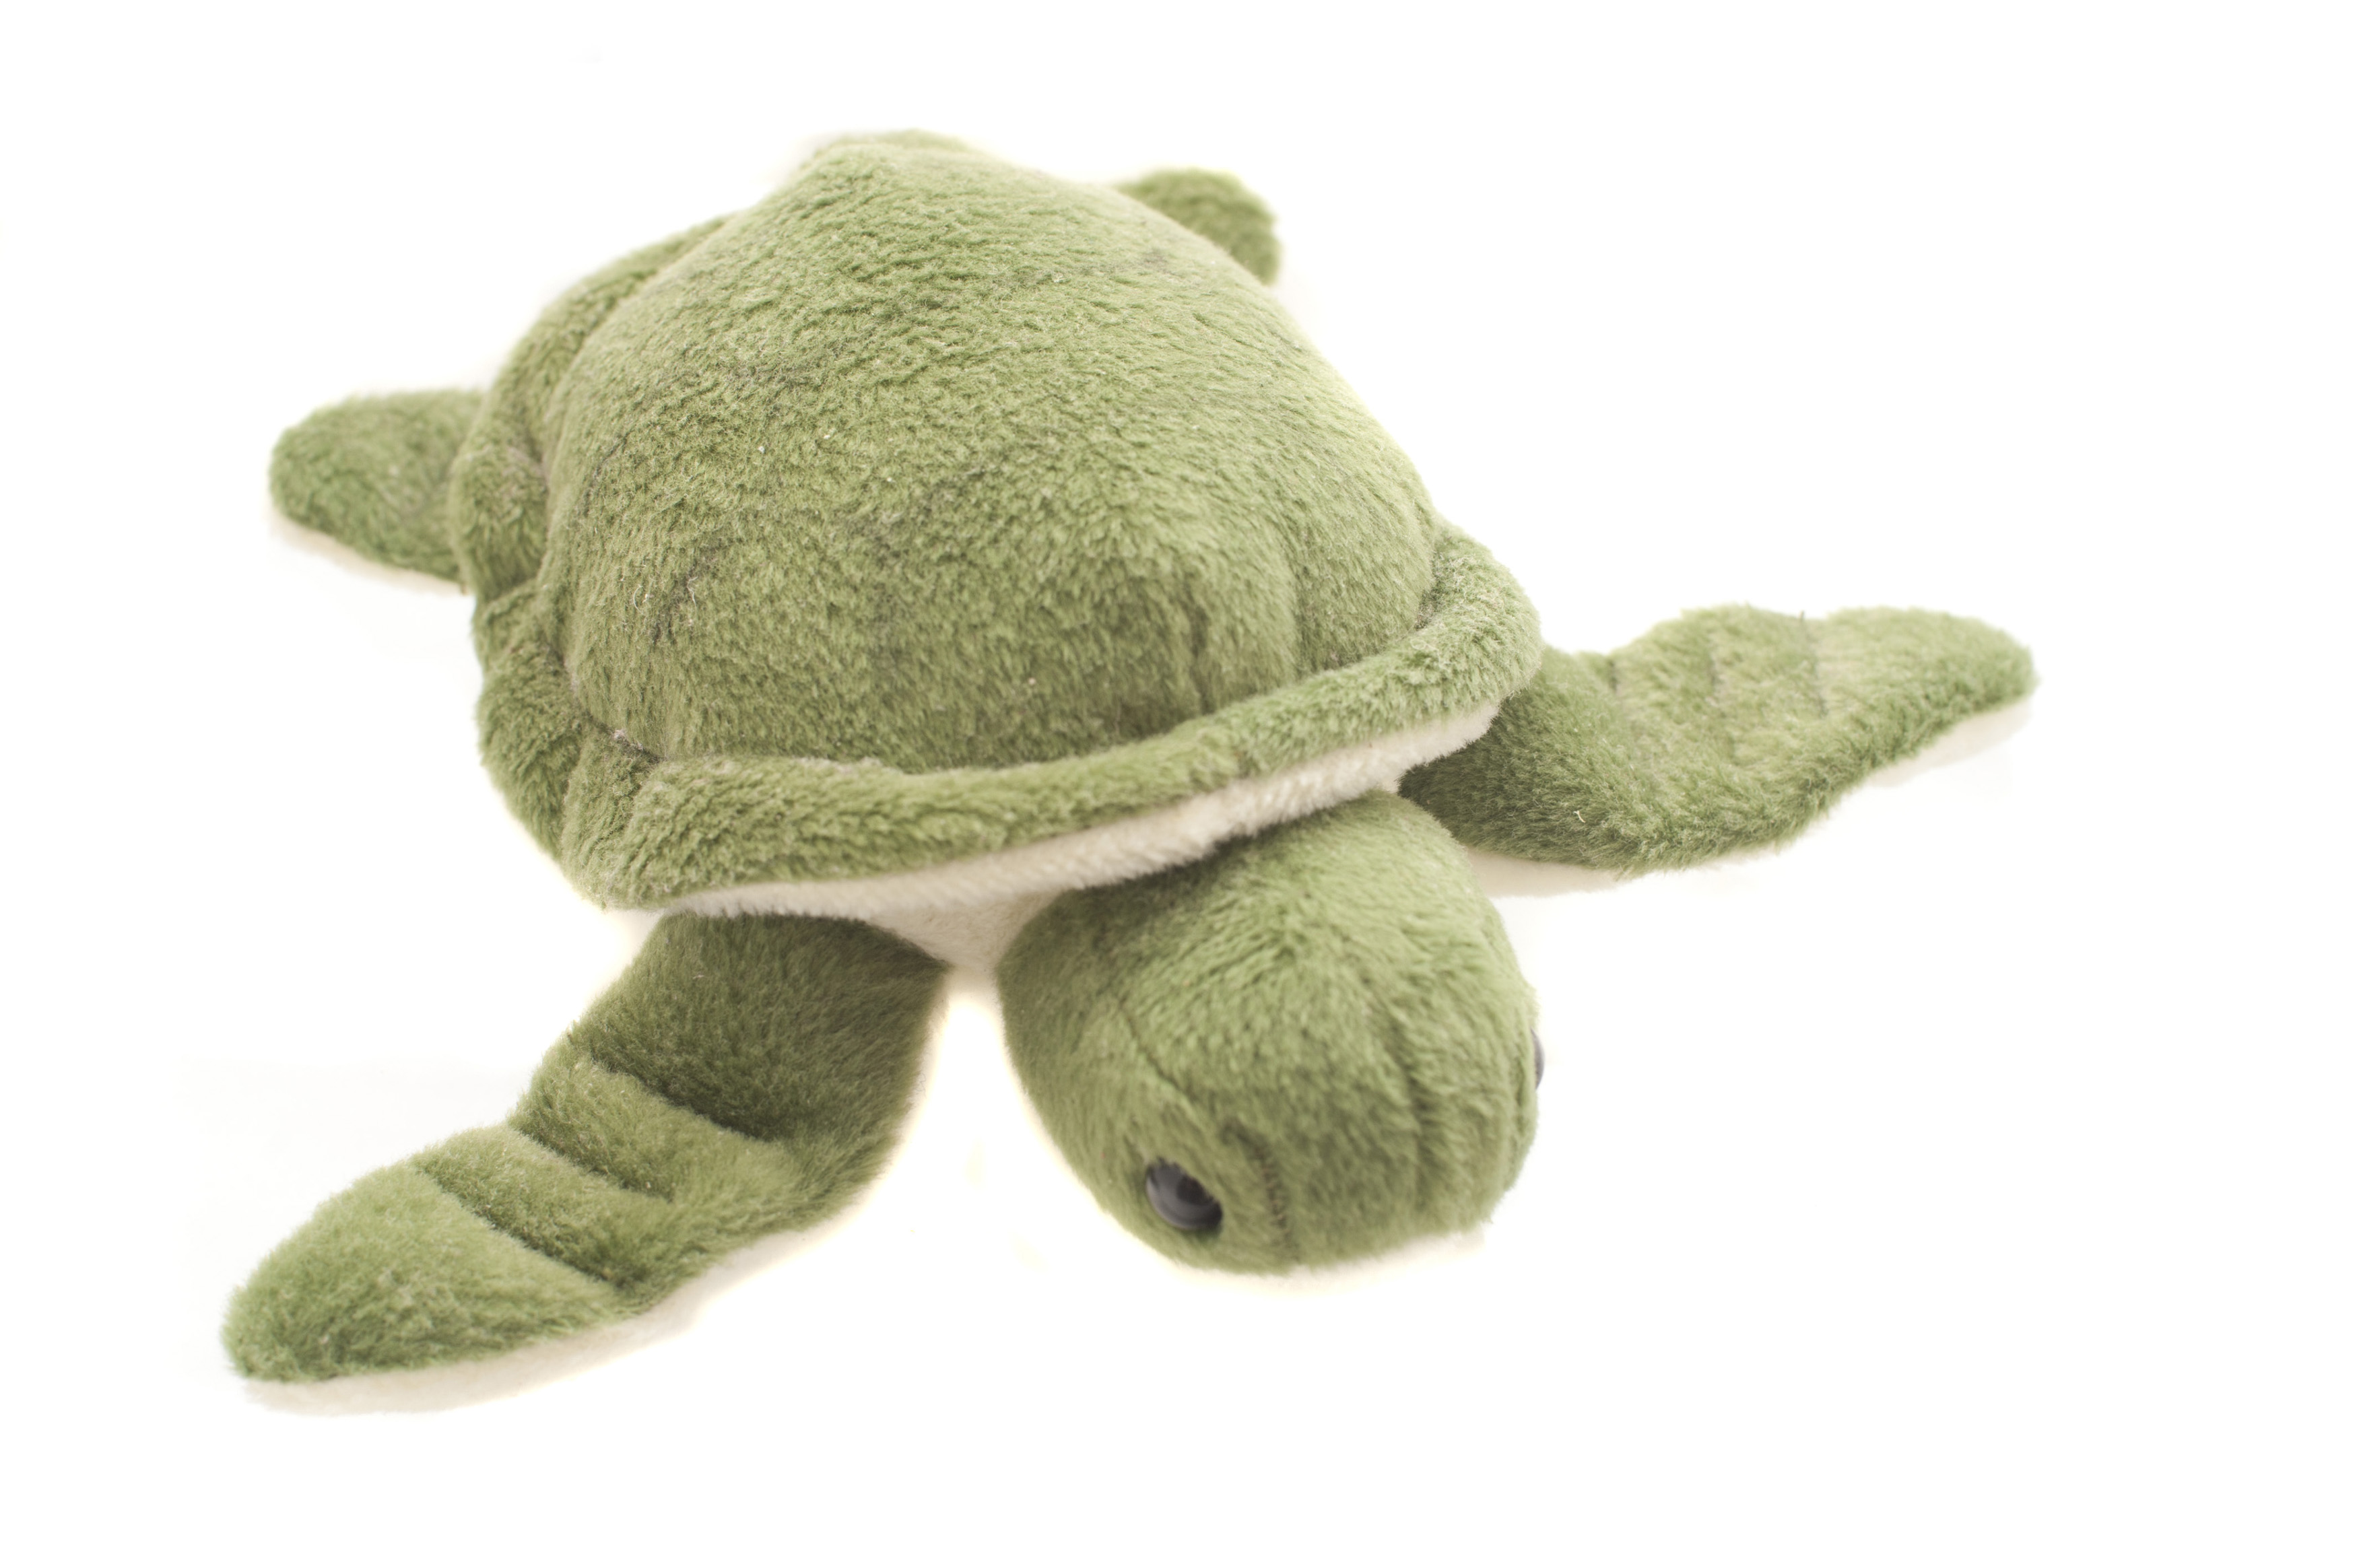 cute stuffed turtles